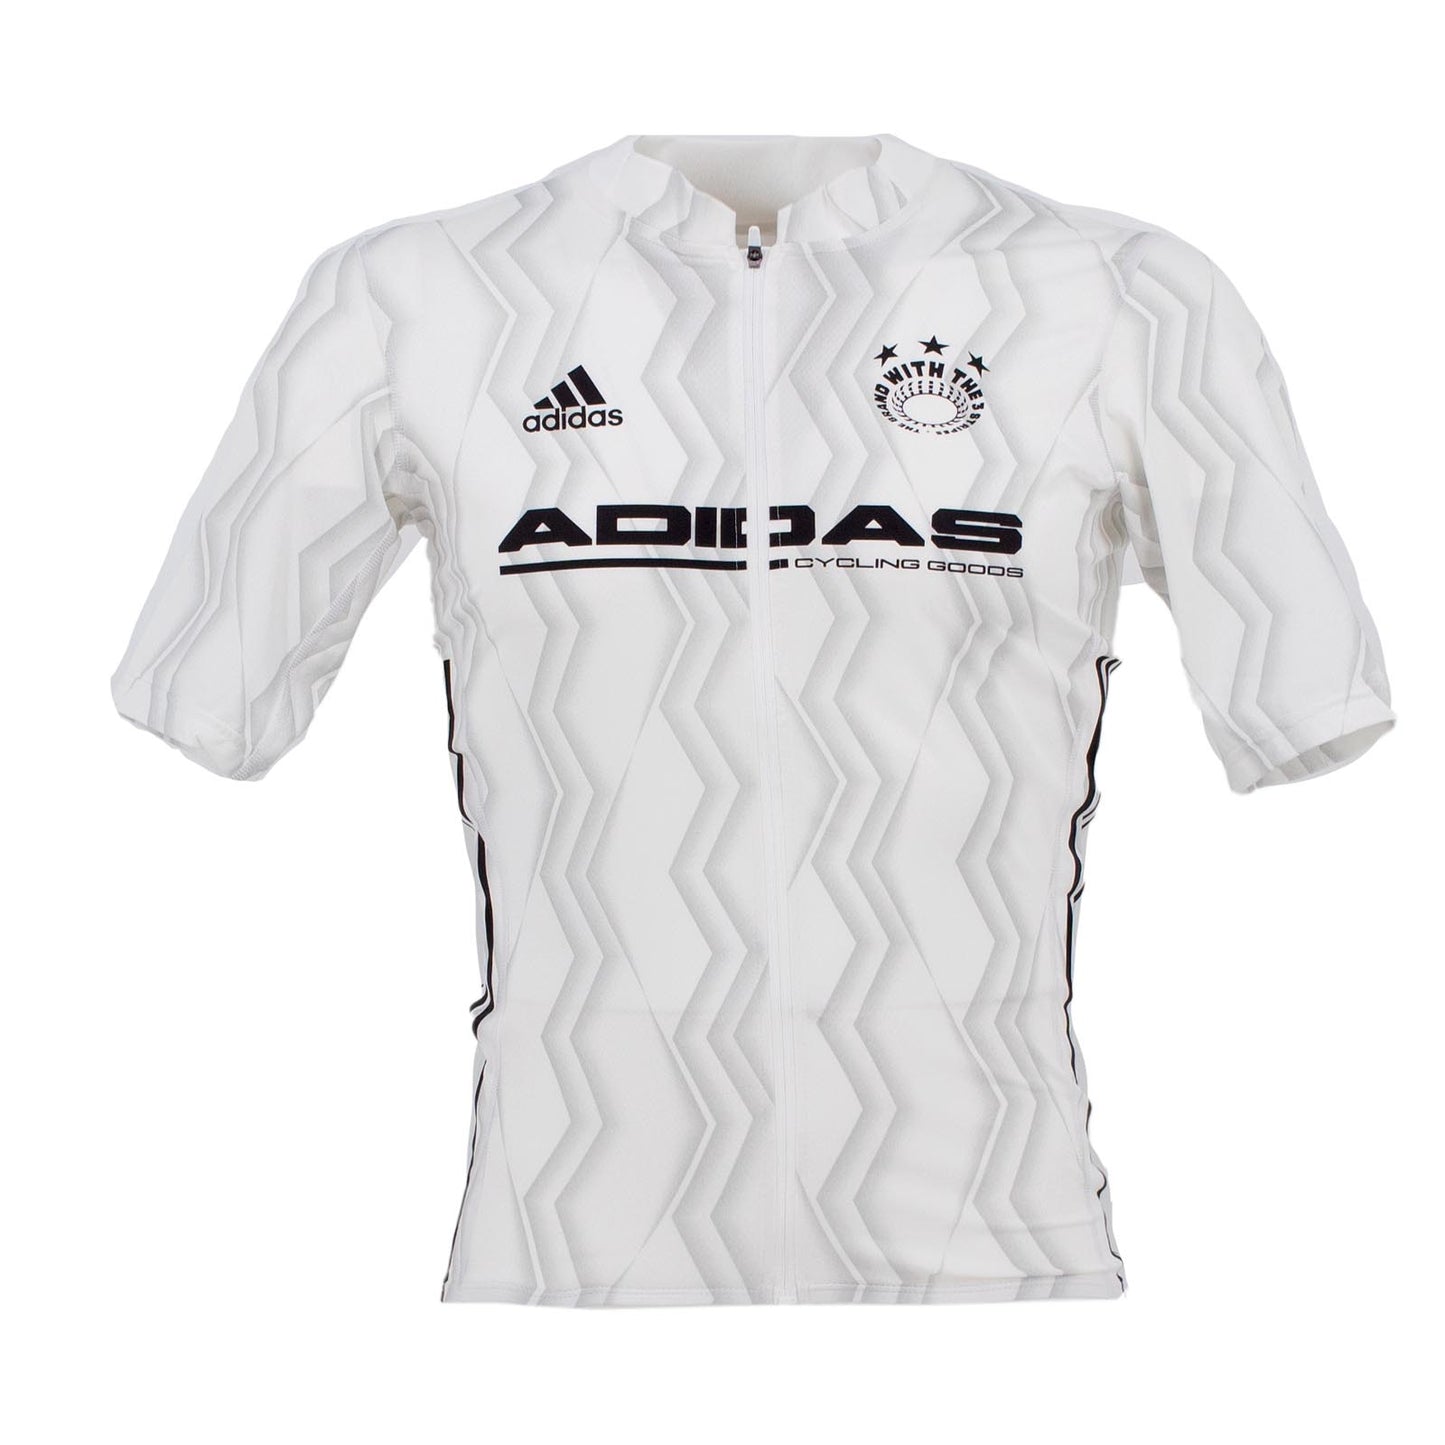 Adidas Cycling The Jersey Q3 M Jersey Rad Trikot T-Shirt Herren weiß HA0421 M